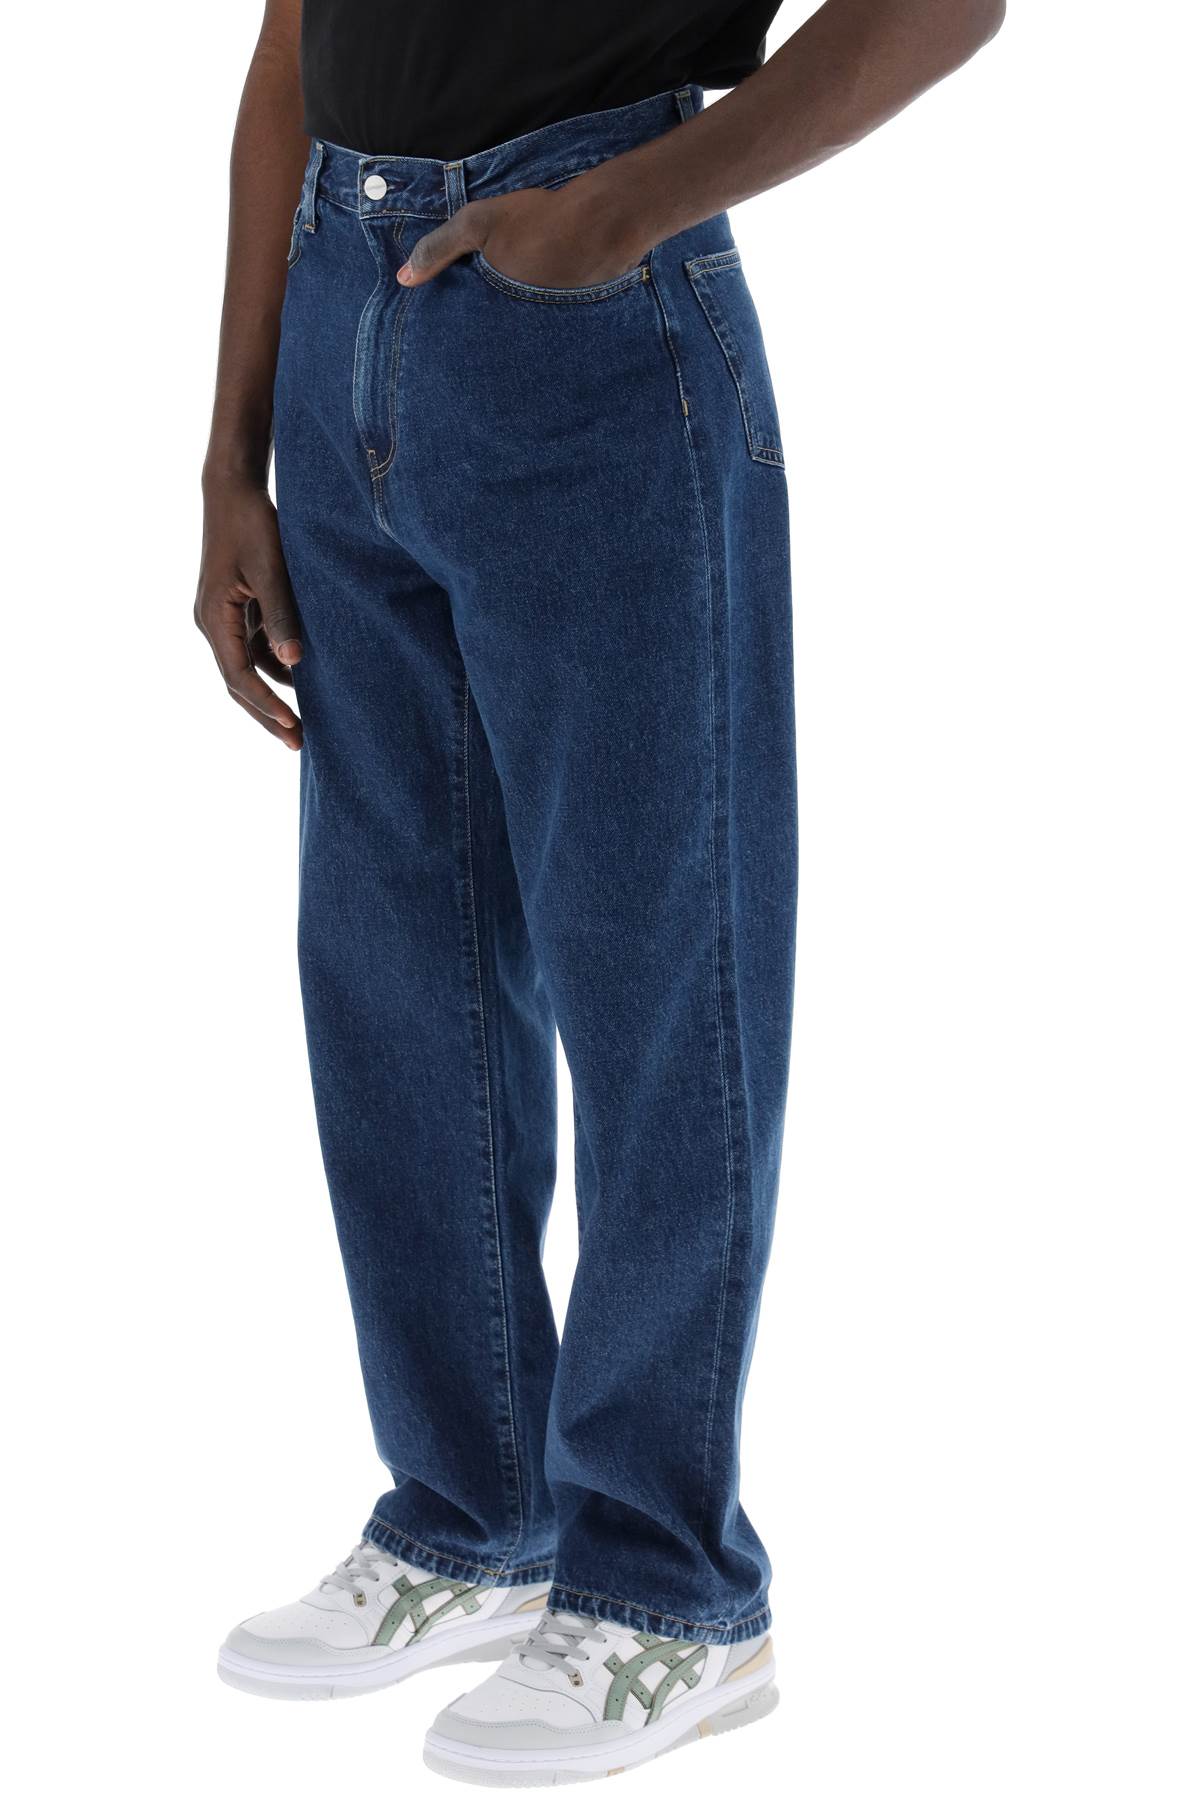 Carhartt wip landon loose fit jeans-3